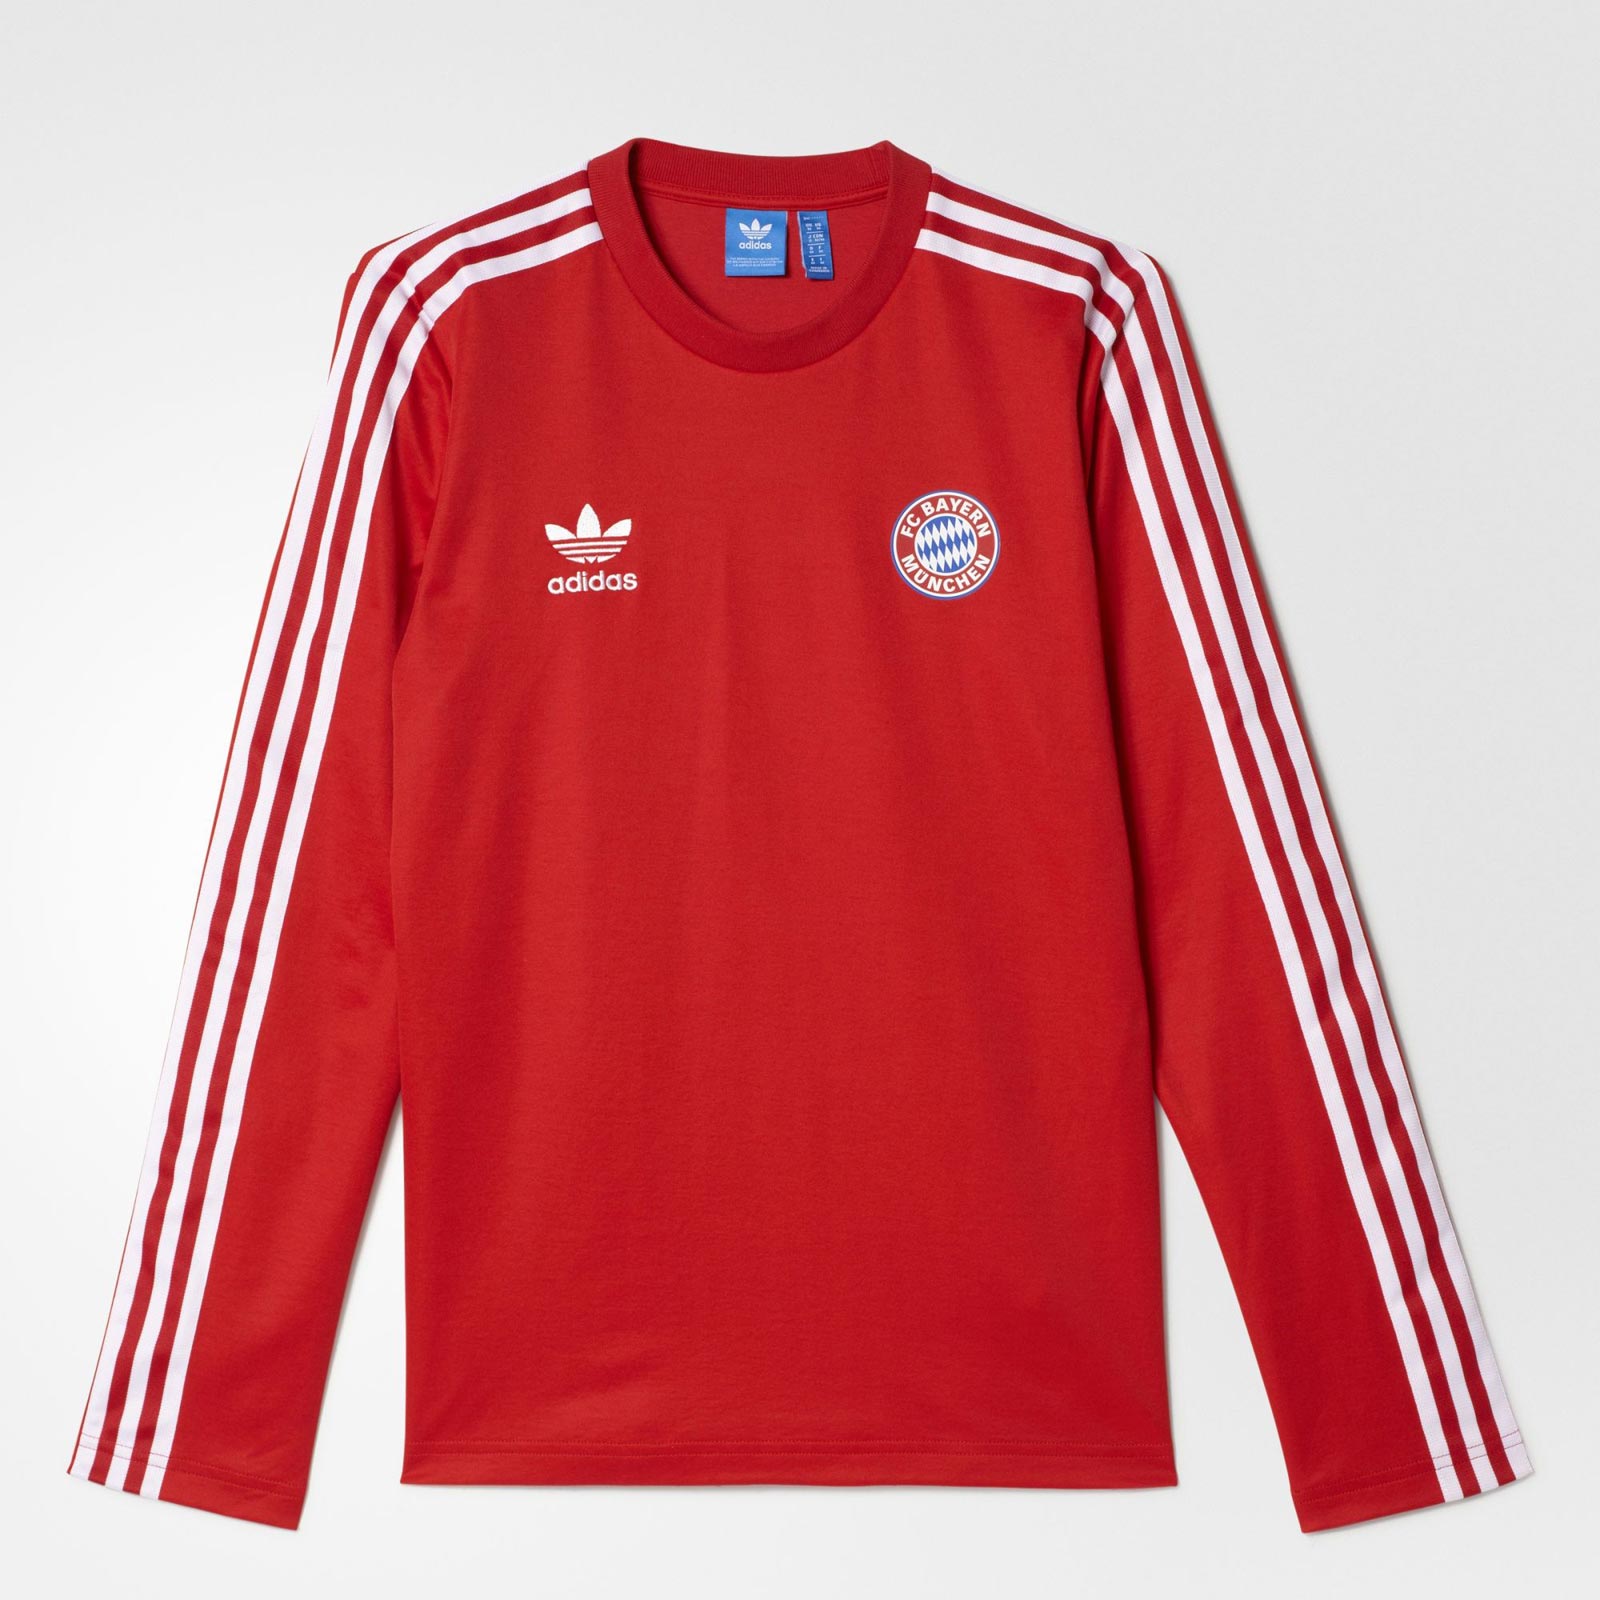 Adidas Originals Bayern Munich Collection Revealed - Footy Headlines1600 x 1600